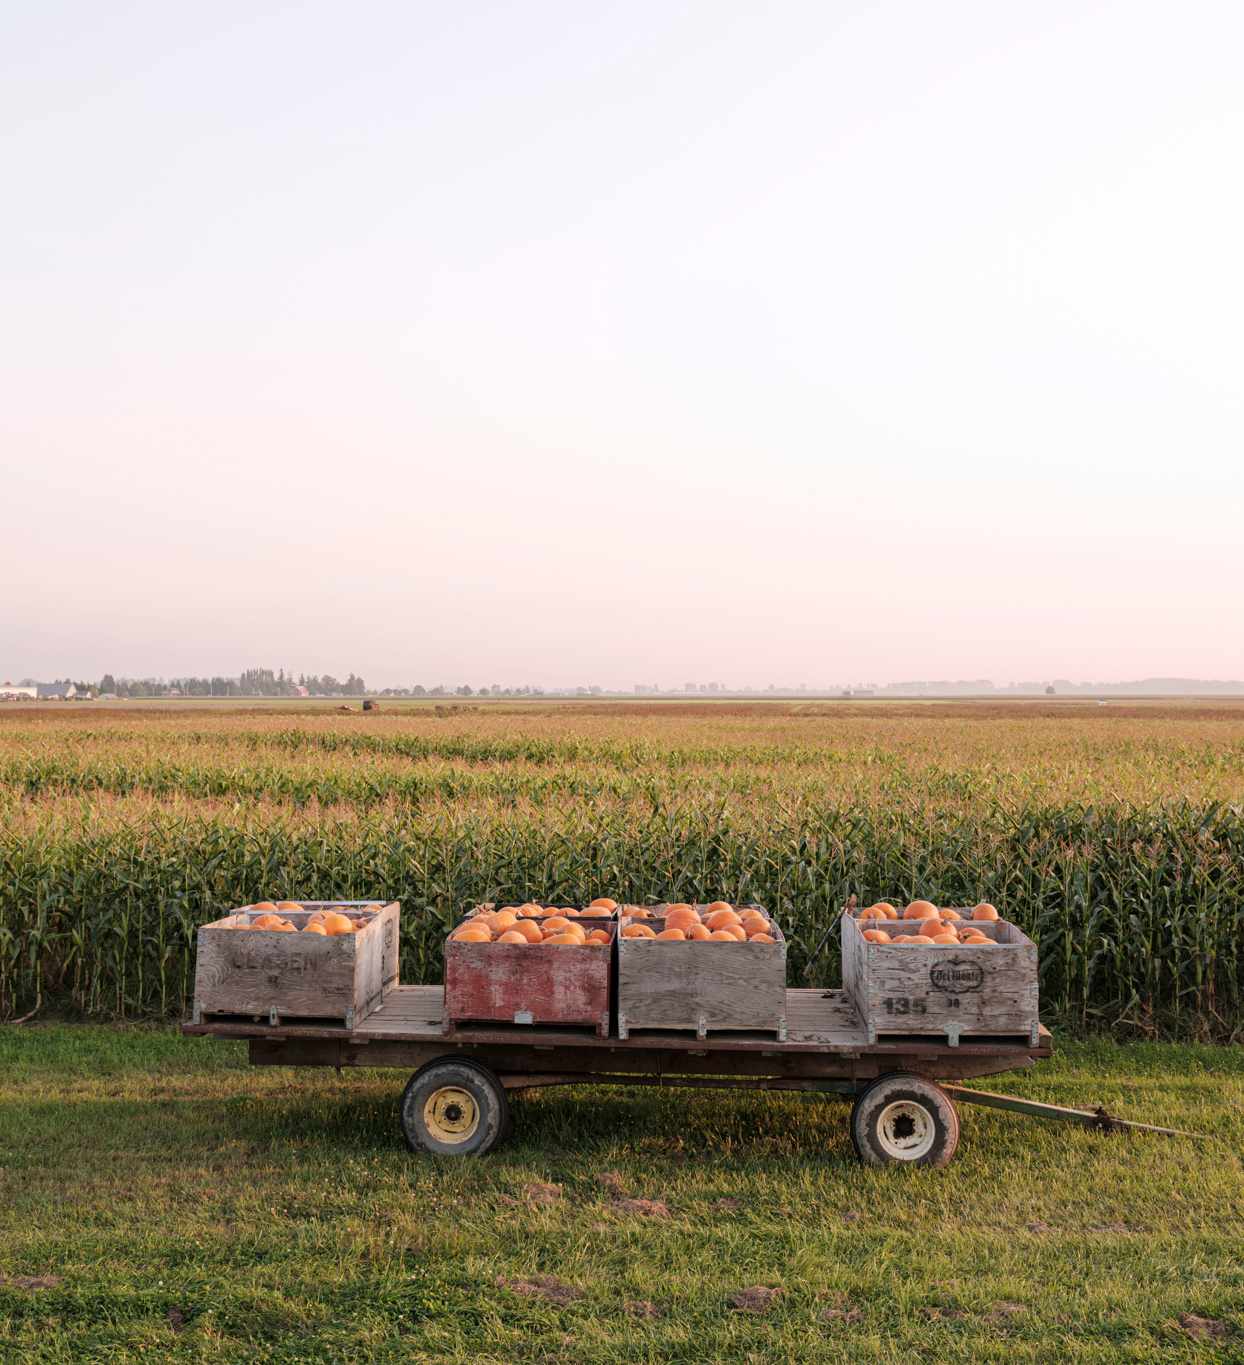 pumpkin patch crates on cart